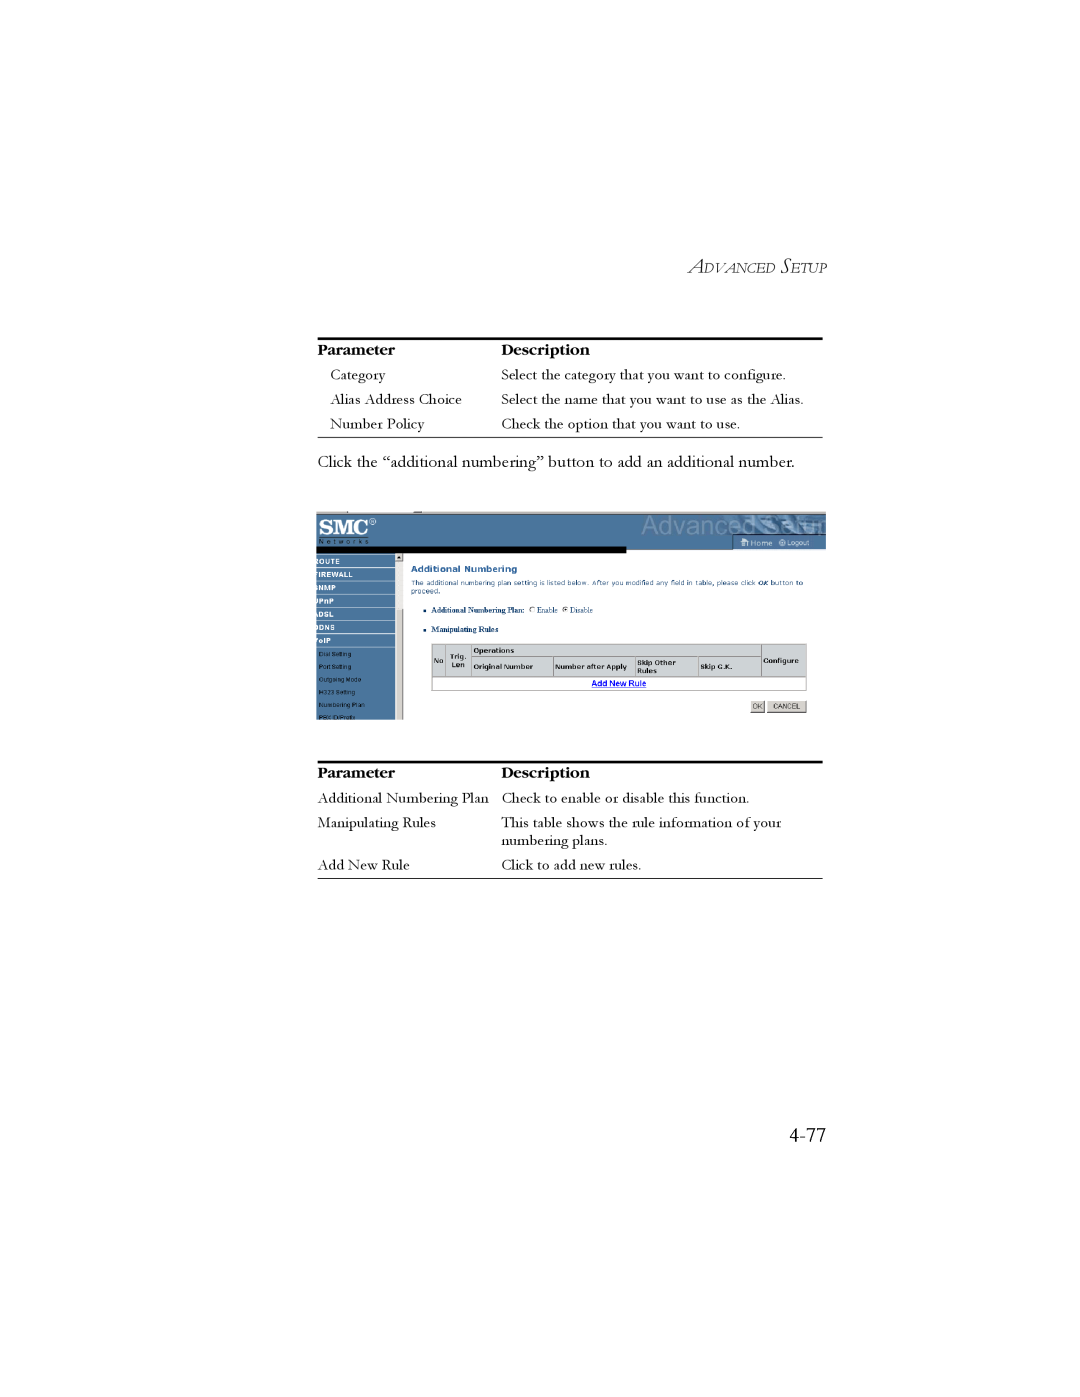 SMC Networks SMC7908VoWBRA manual 4-77, Parameter, Description 